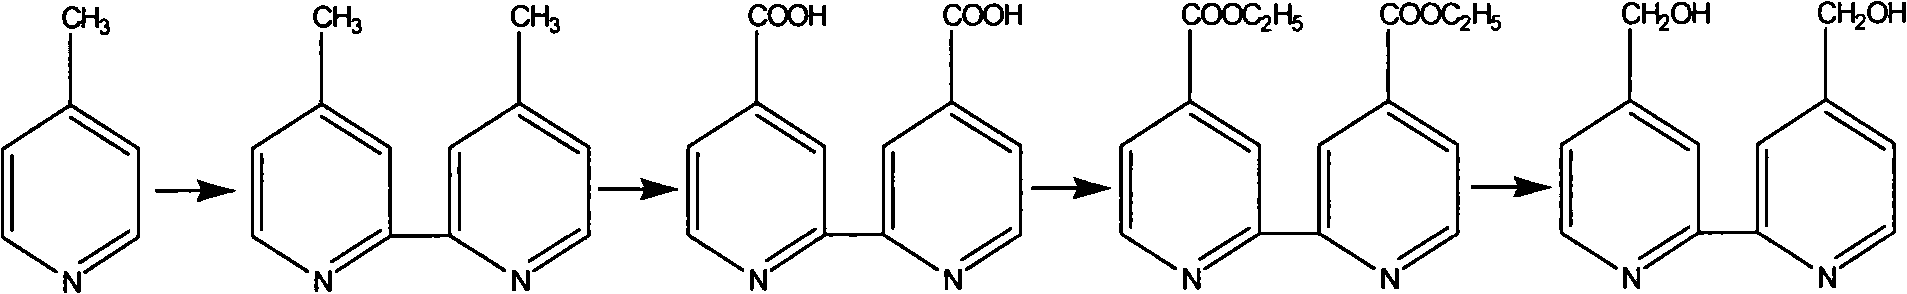 Bidentate ligand 4,4í»- bis (hydroxymethyl)-2,2í»dipyridine, preparation thereof and application to polyketone synthesis